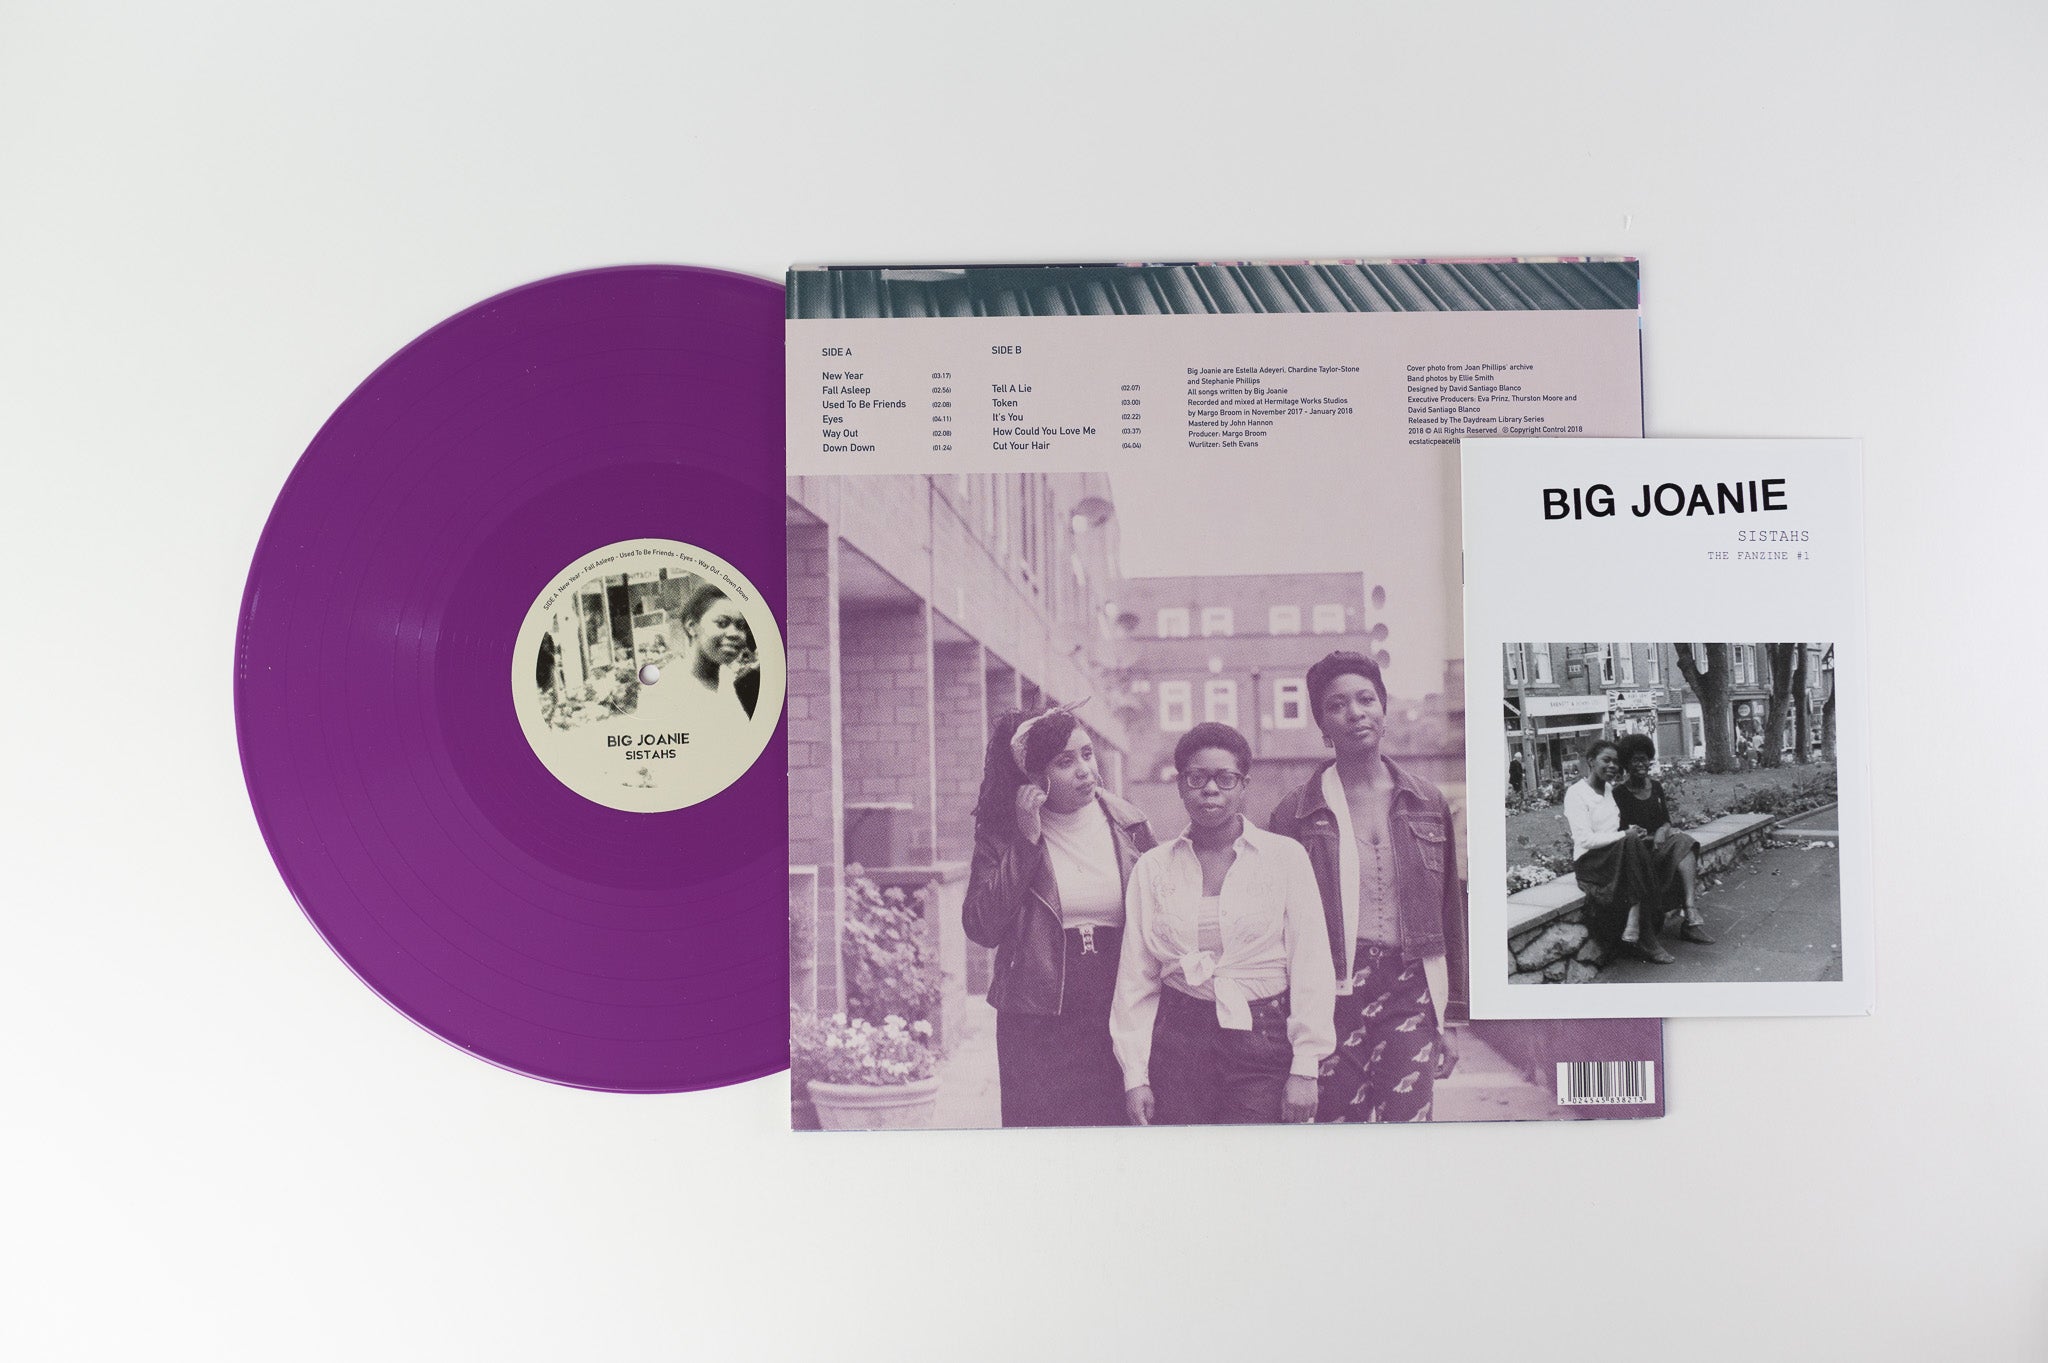 Big Joanie - Sistahs on The Daydream Library Series Purple Vinyl